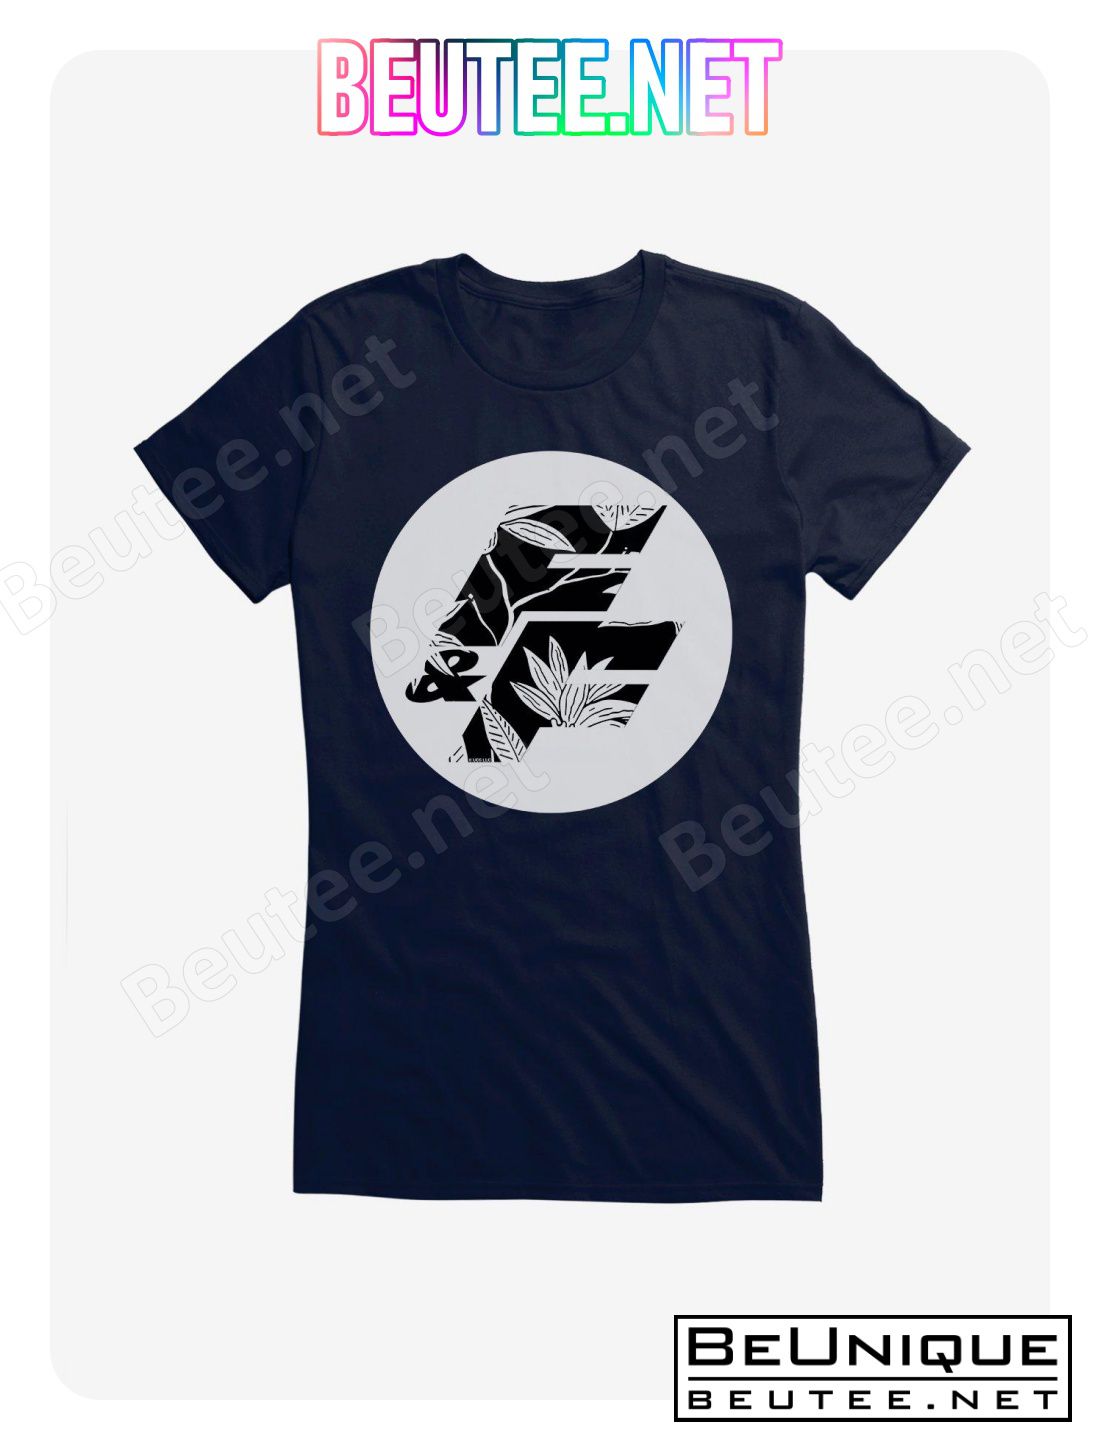 Fast & Furious Grayscale Tropic Logo T-Shirt